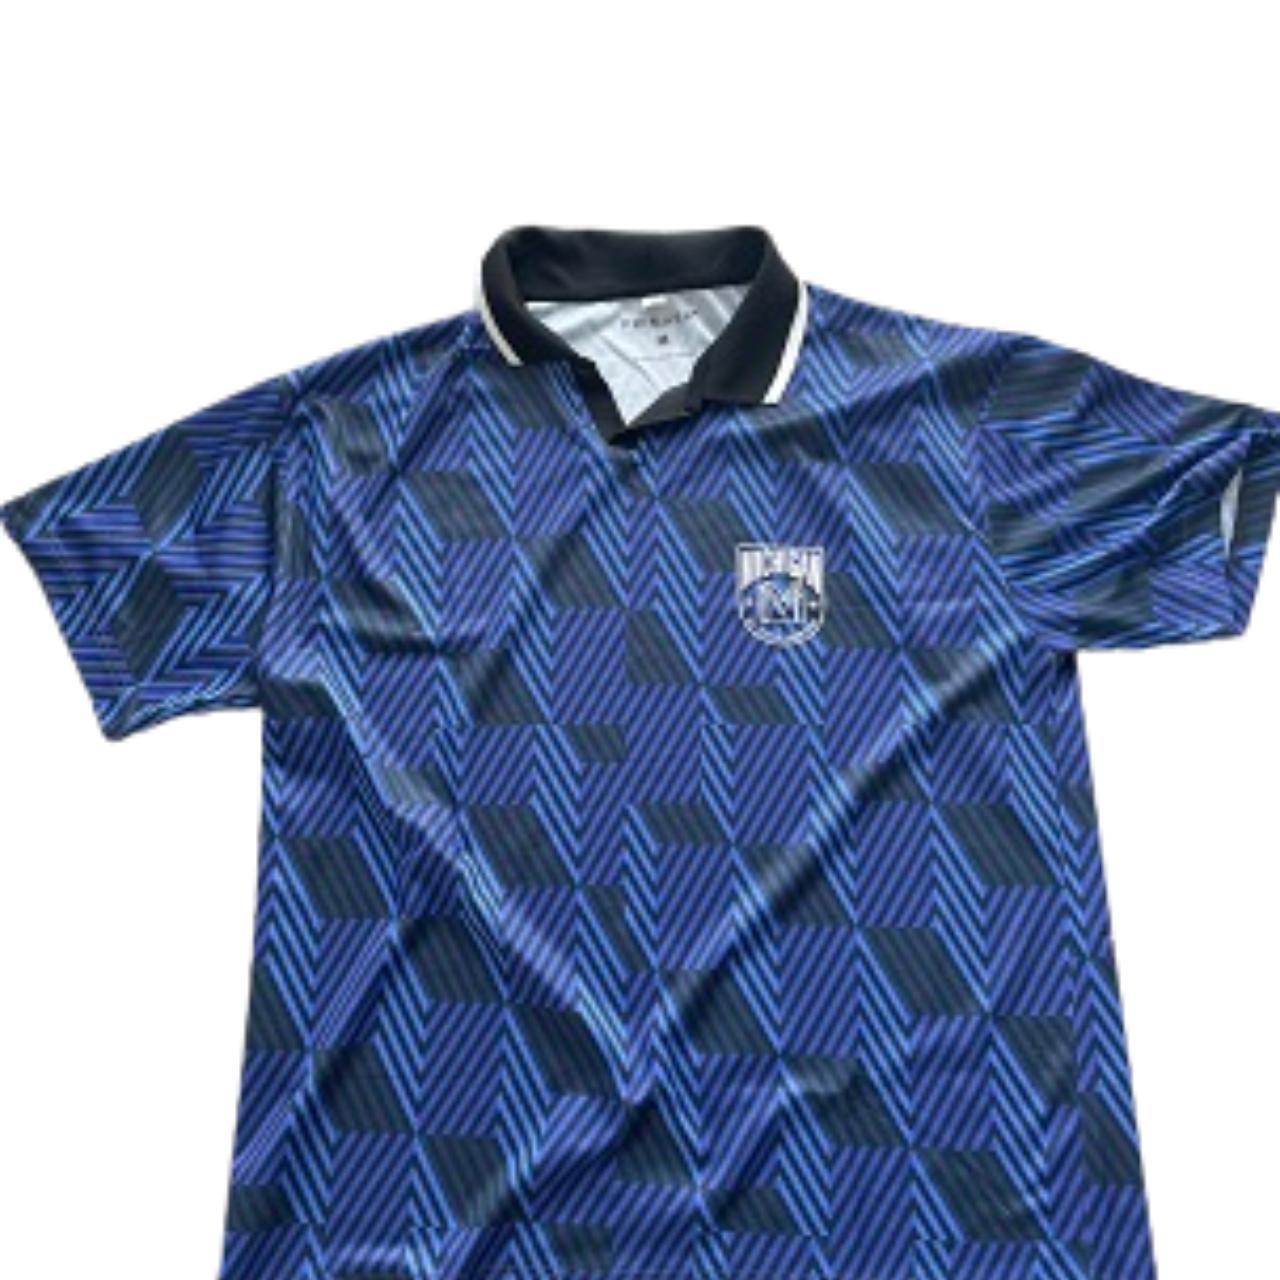 Vintage Primark blue geometric pattern michigan polo shirt size M